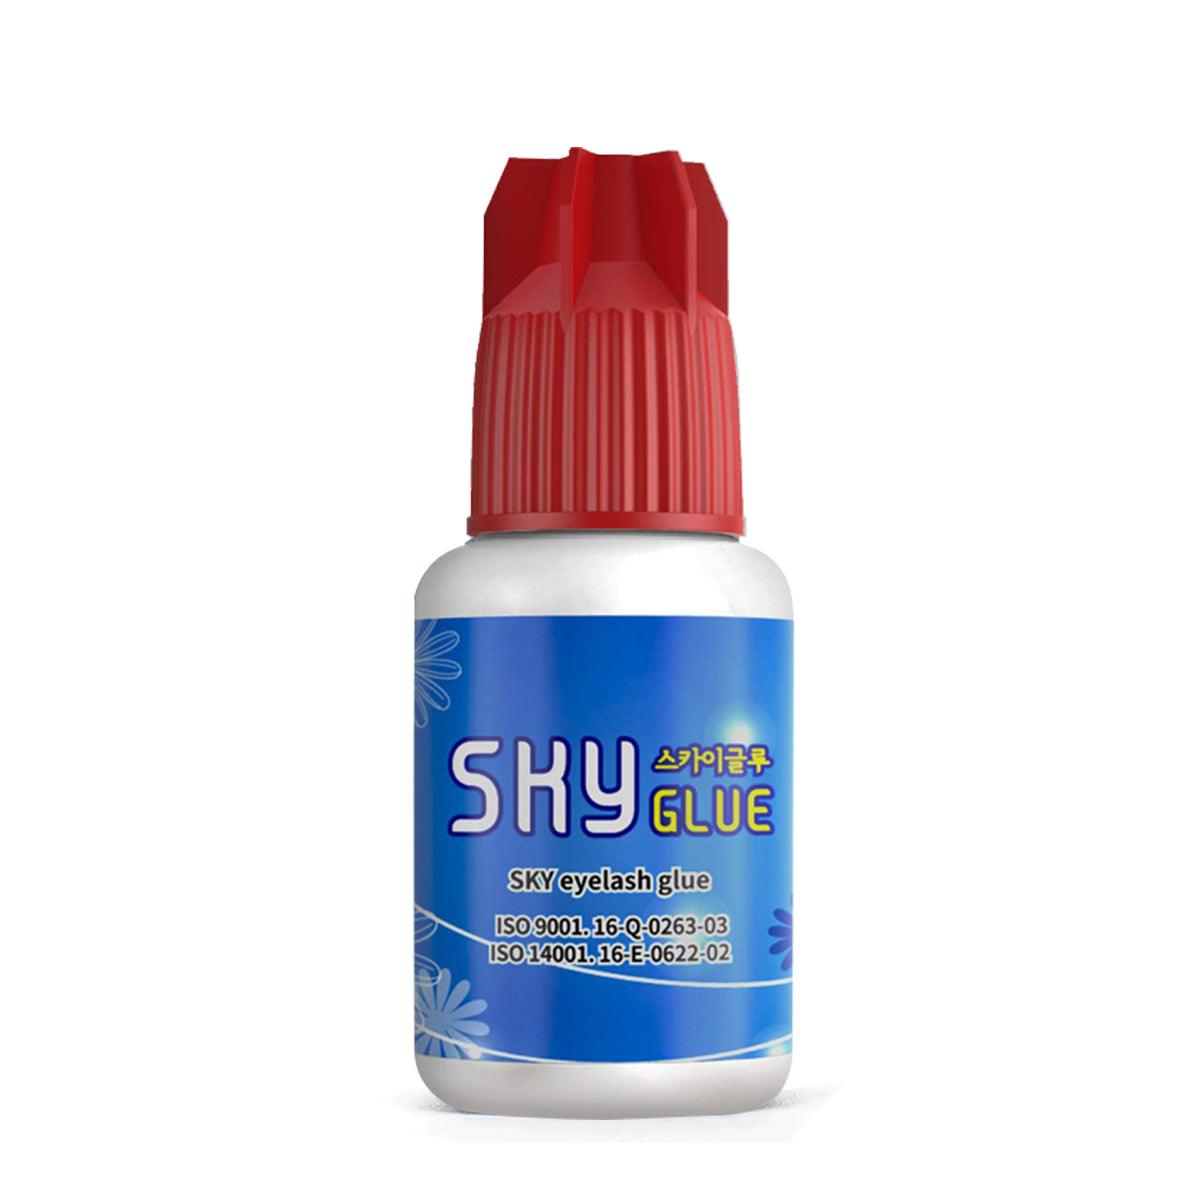 Sky Glue S+ 5ml Lash Extensions Adhesive